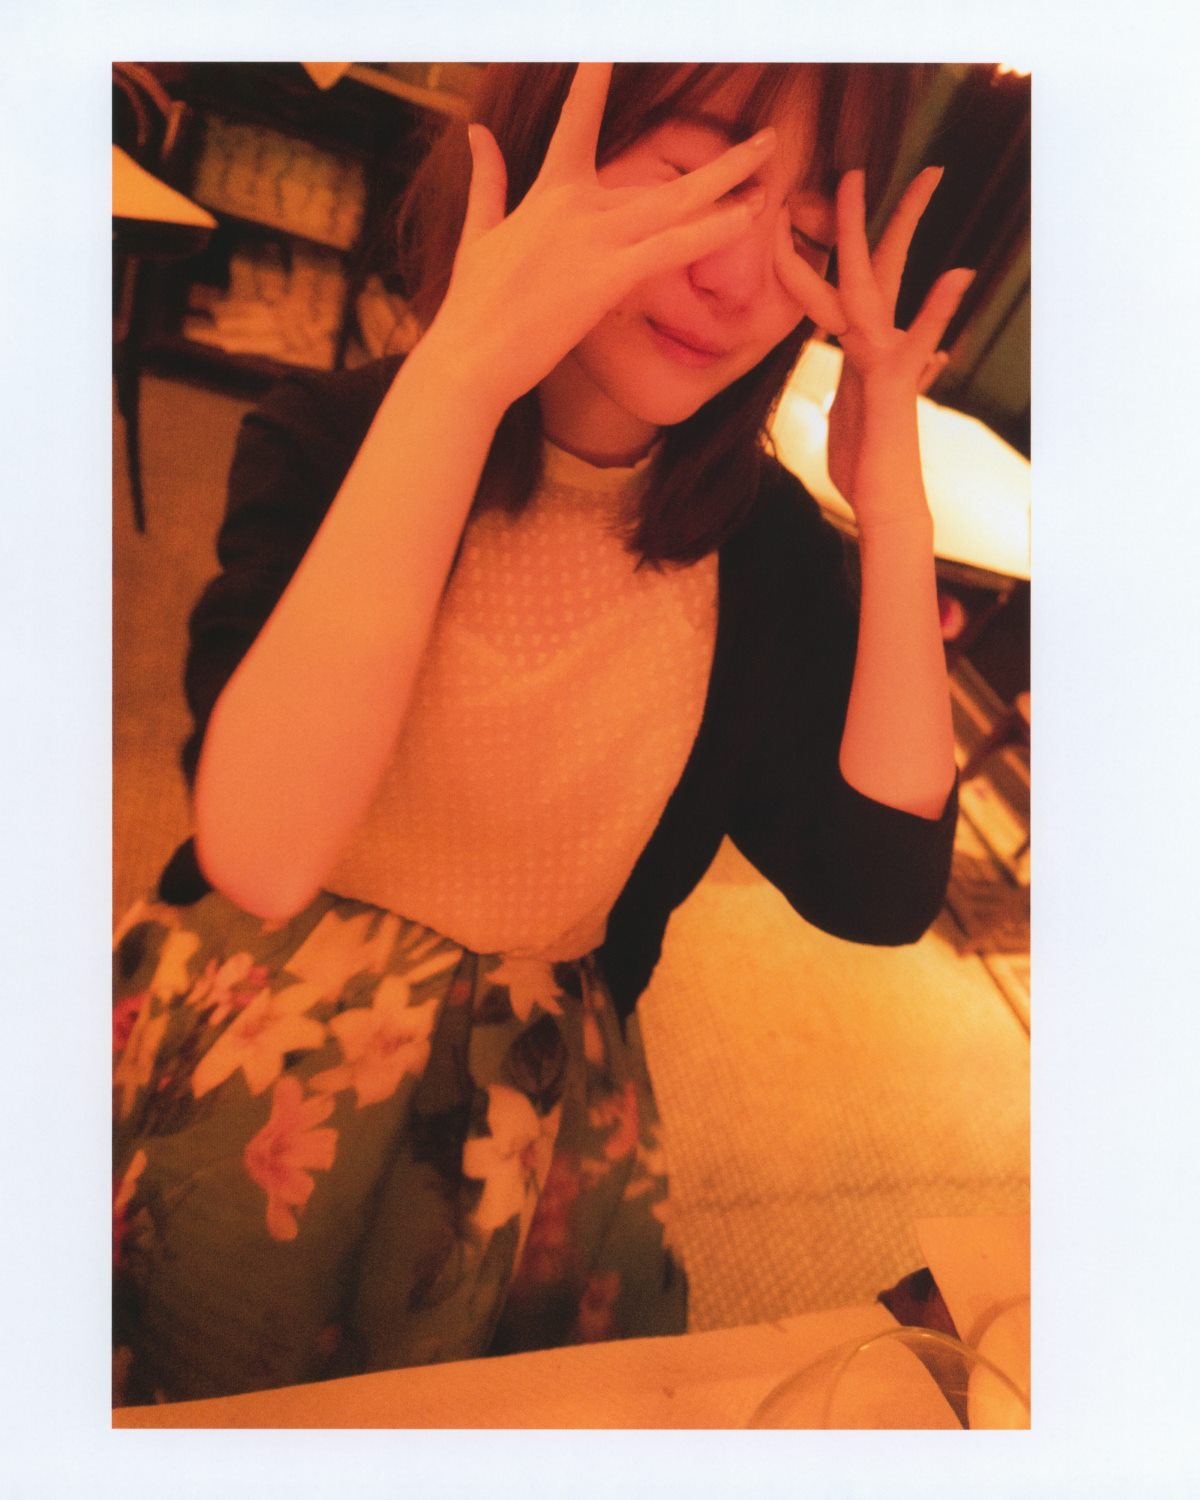 Photobook Ikuta Erika 2nd Photobook Intermission Nogizaka46 Bonus Postcard 生田絵梨花写真集 インターミッション 0129 1644730143.jpg